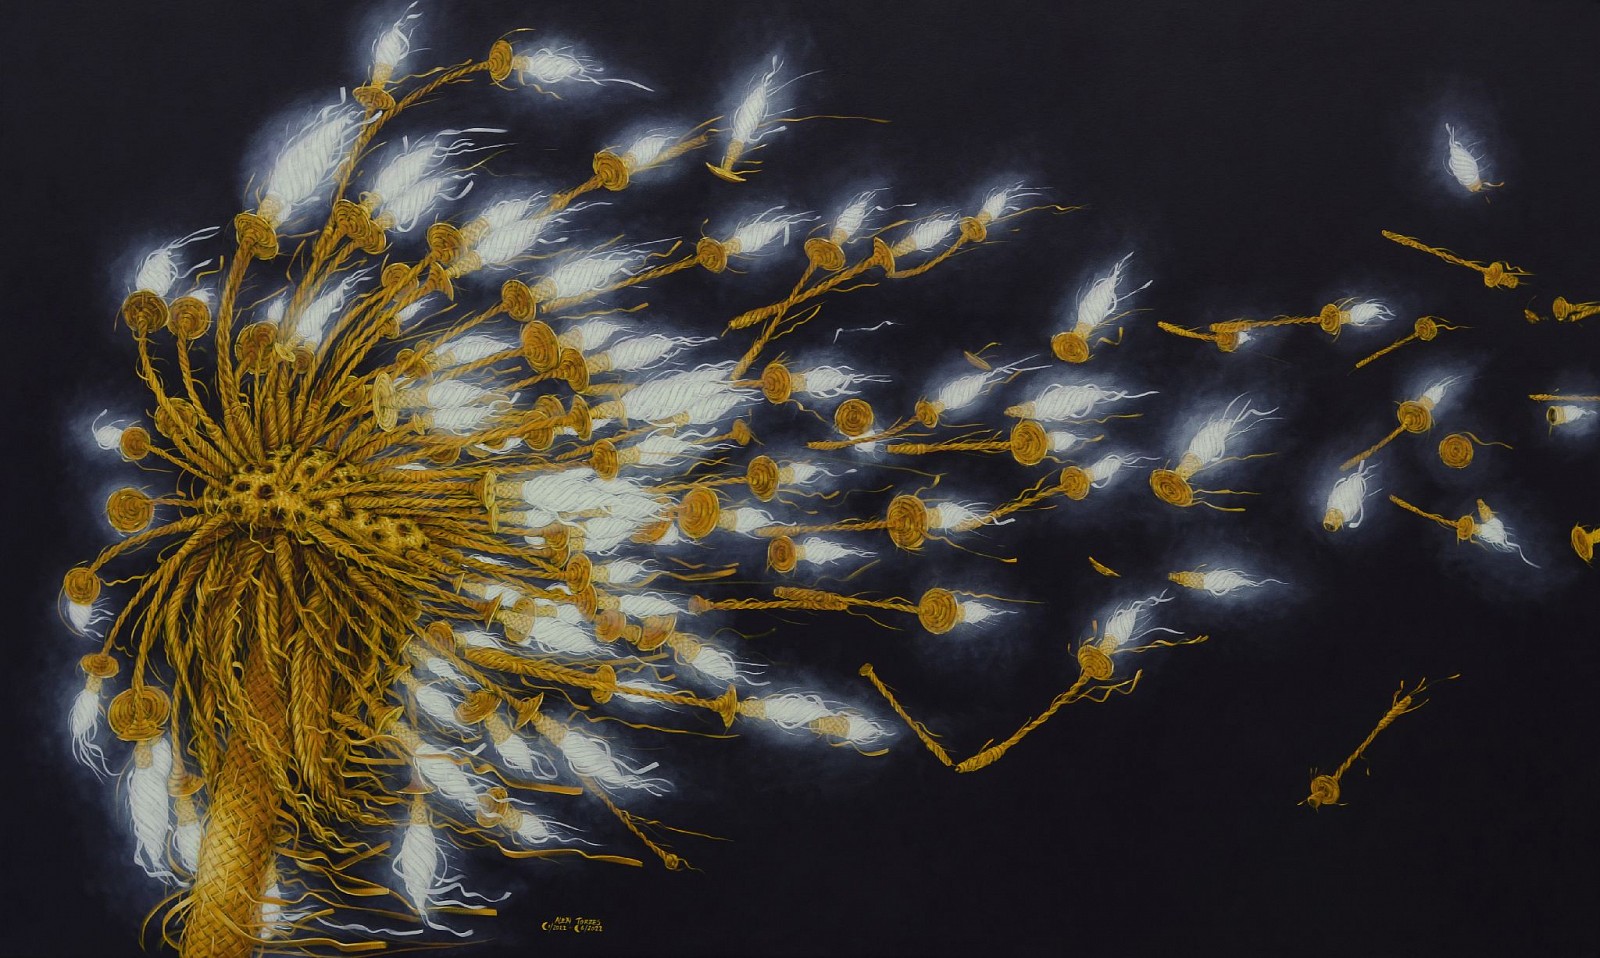 Alexi Torres, Wish Series: Enlightenment, 2022
Original Oil on Canvas, 54 x 90 in.